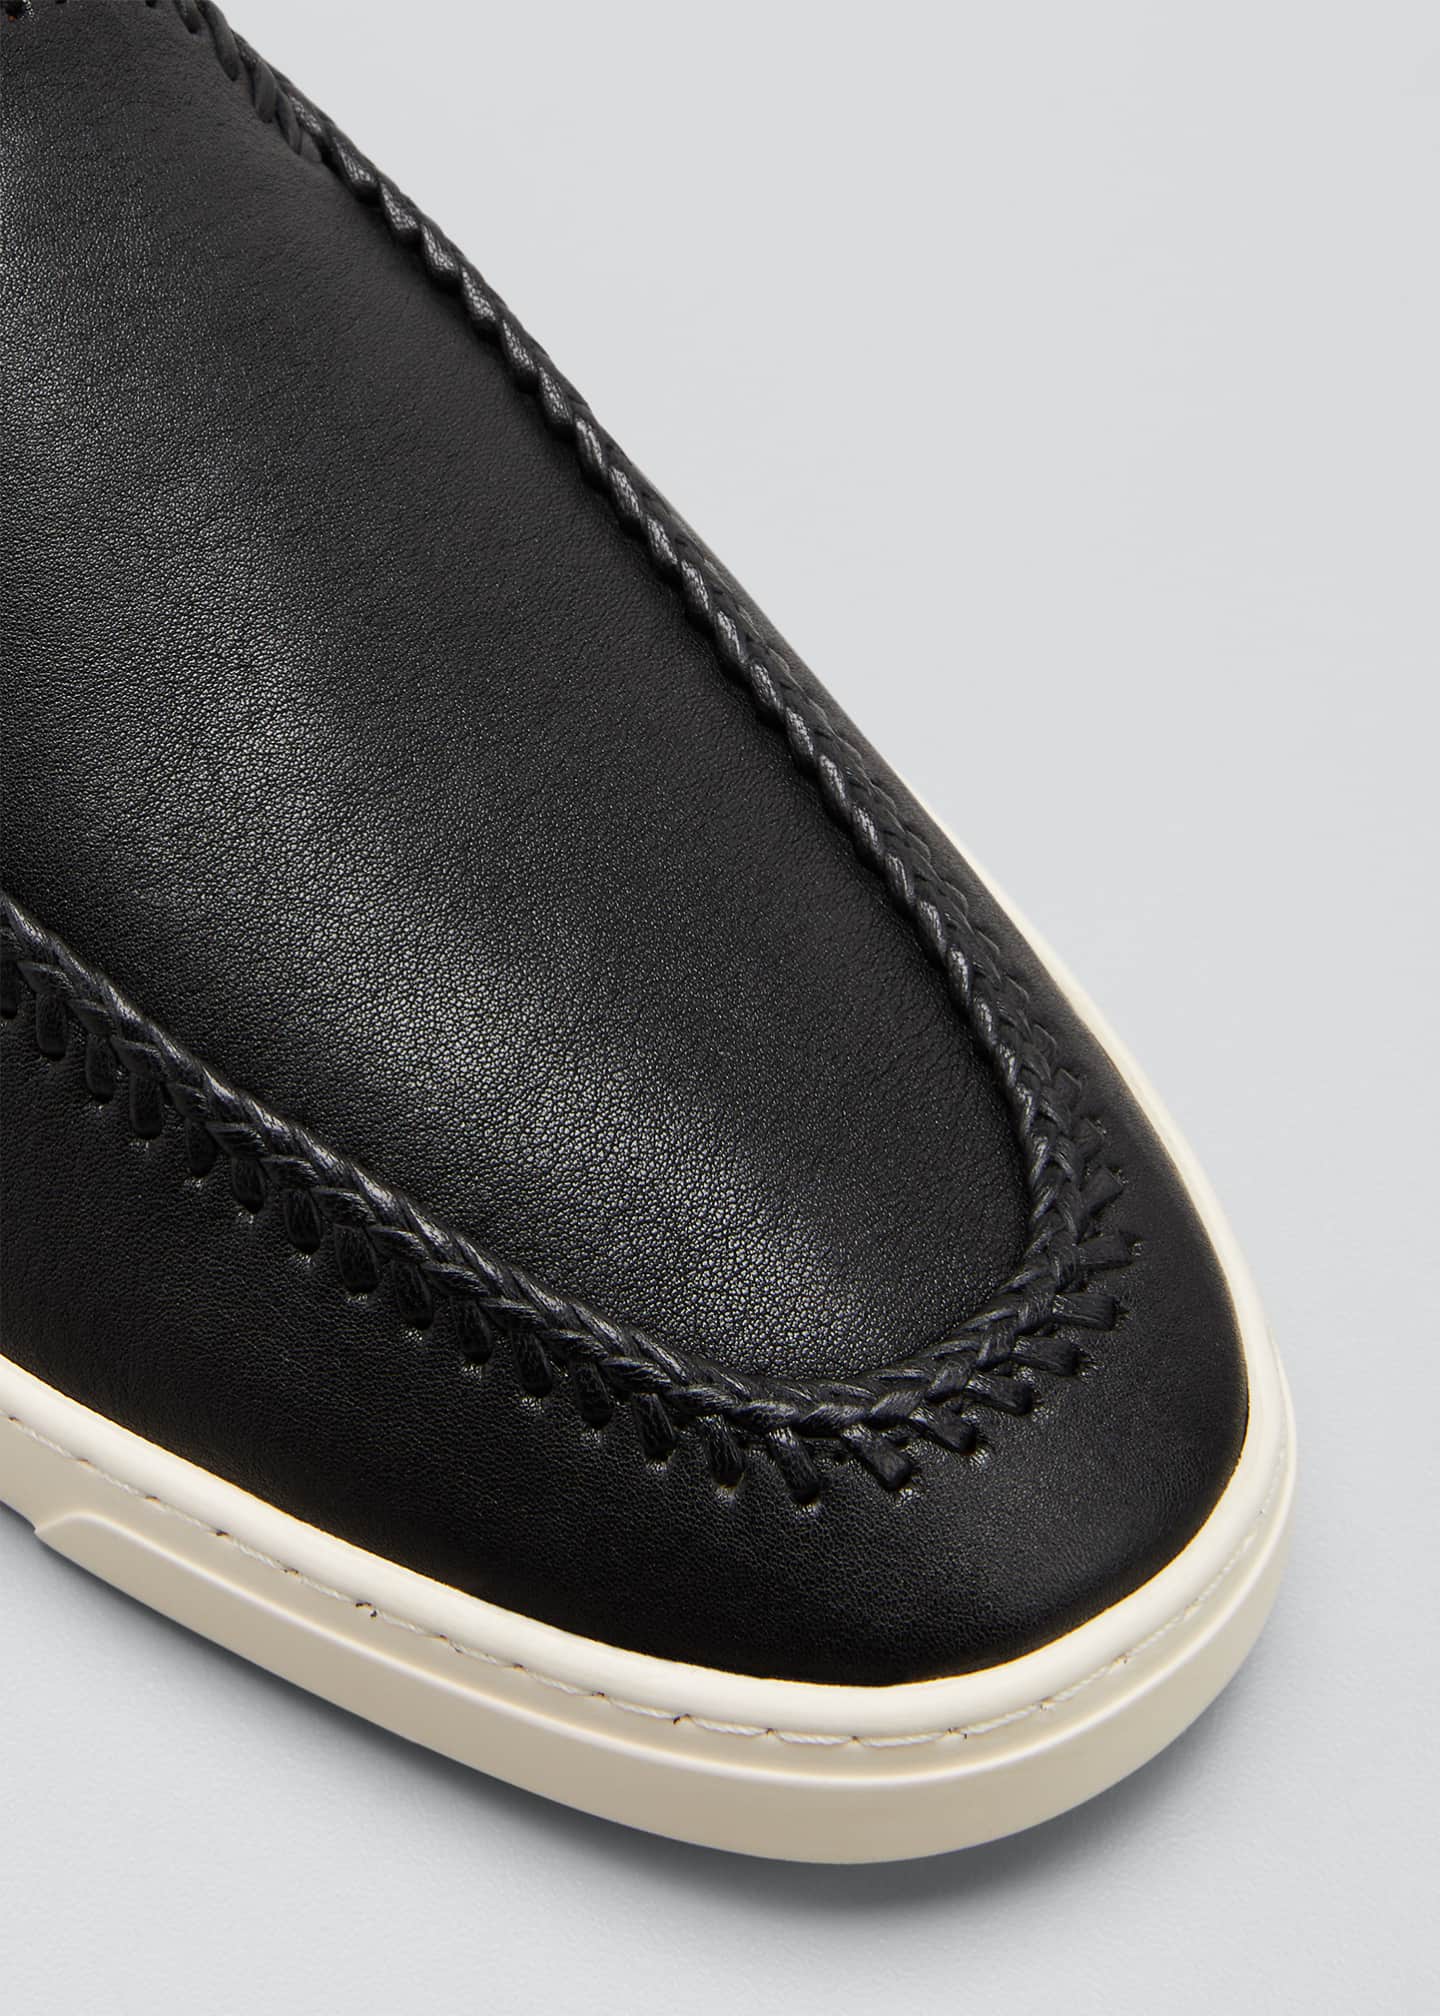 Giorgio Armani Men's Woven Leather Slip-On Shoes - Bergdorf Goodman